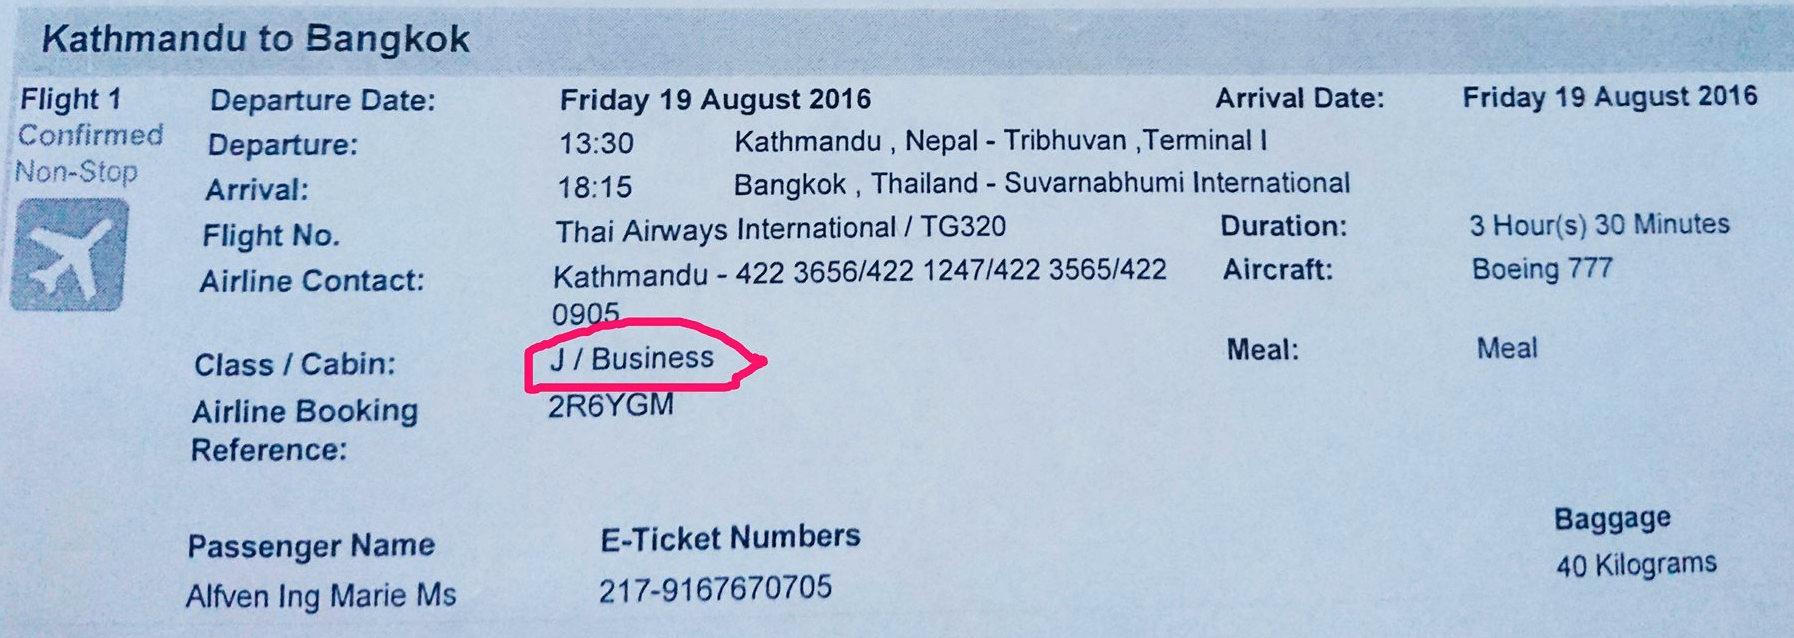 Ing-Marie Alfvéns flygbiljett i business class, från Kathmandu till Bangkok 19 augusti 2016.